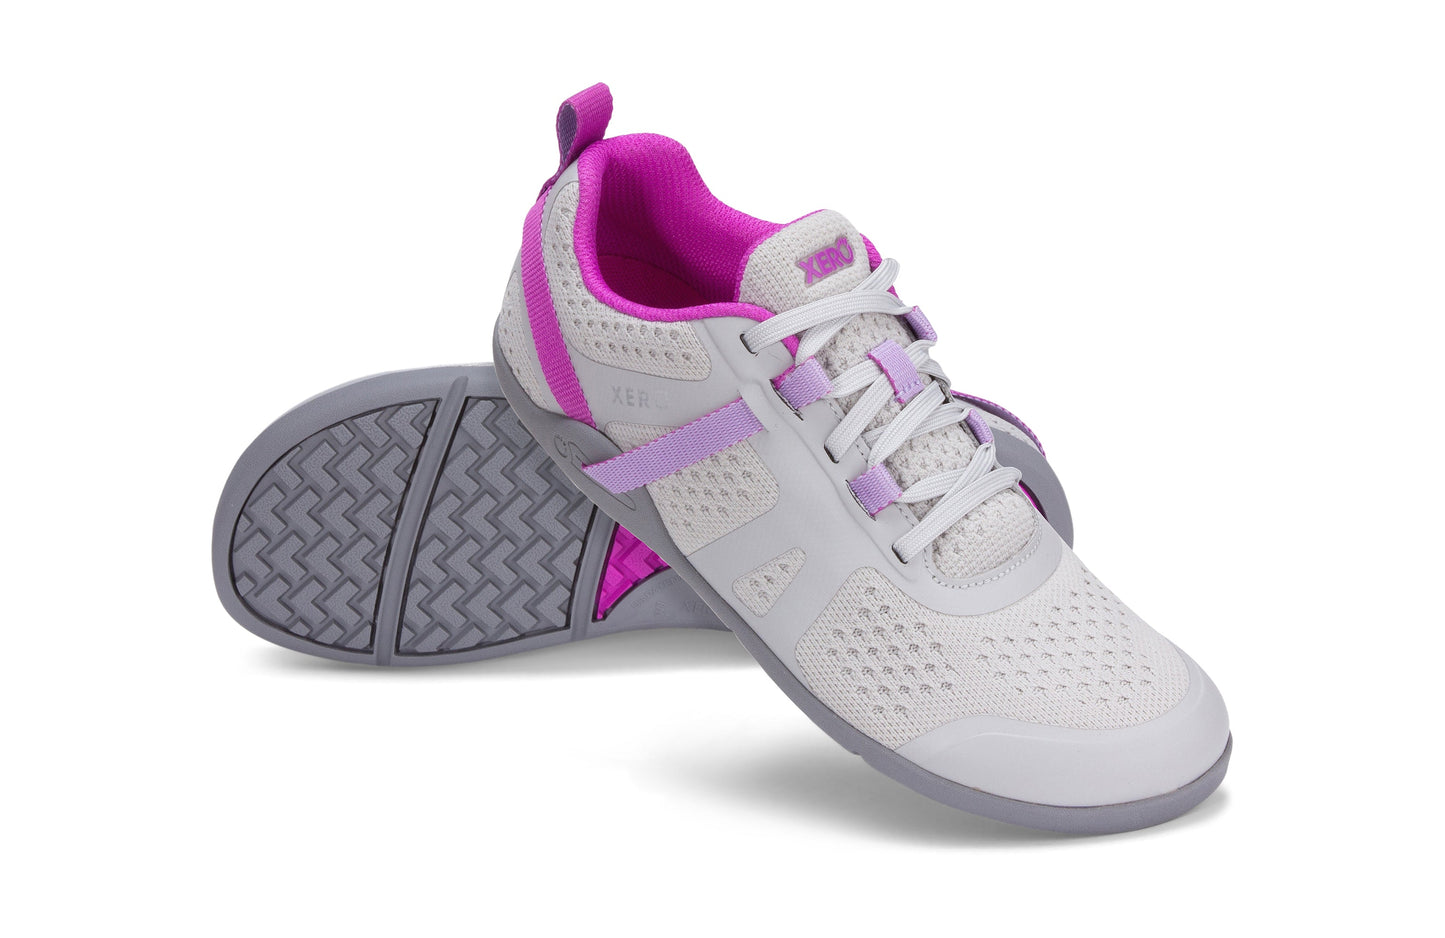 Xero Shoes Prio Neo Womens barfods athleisure trainer til kvinder i farven storm, par